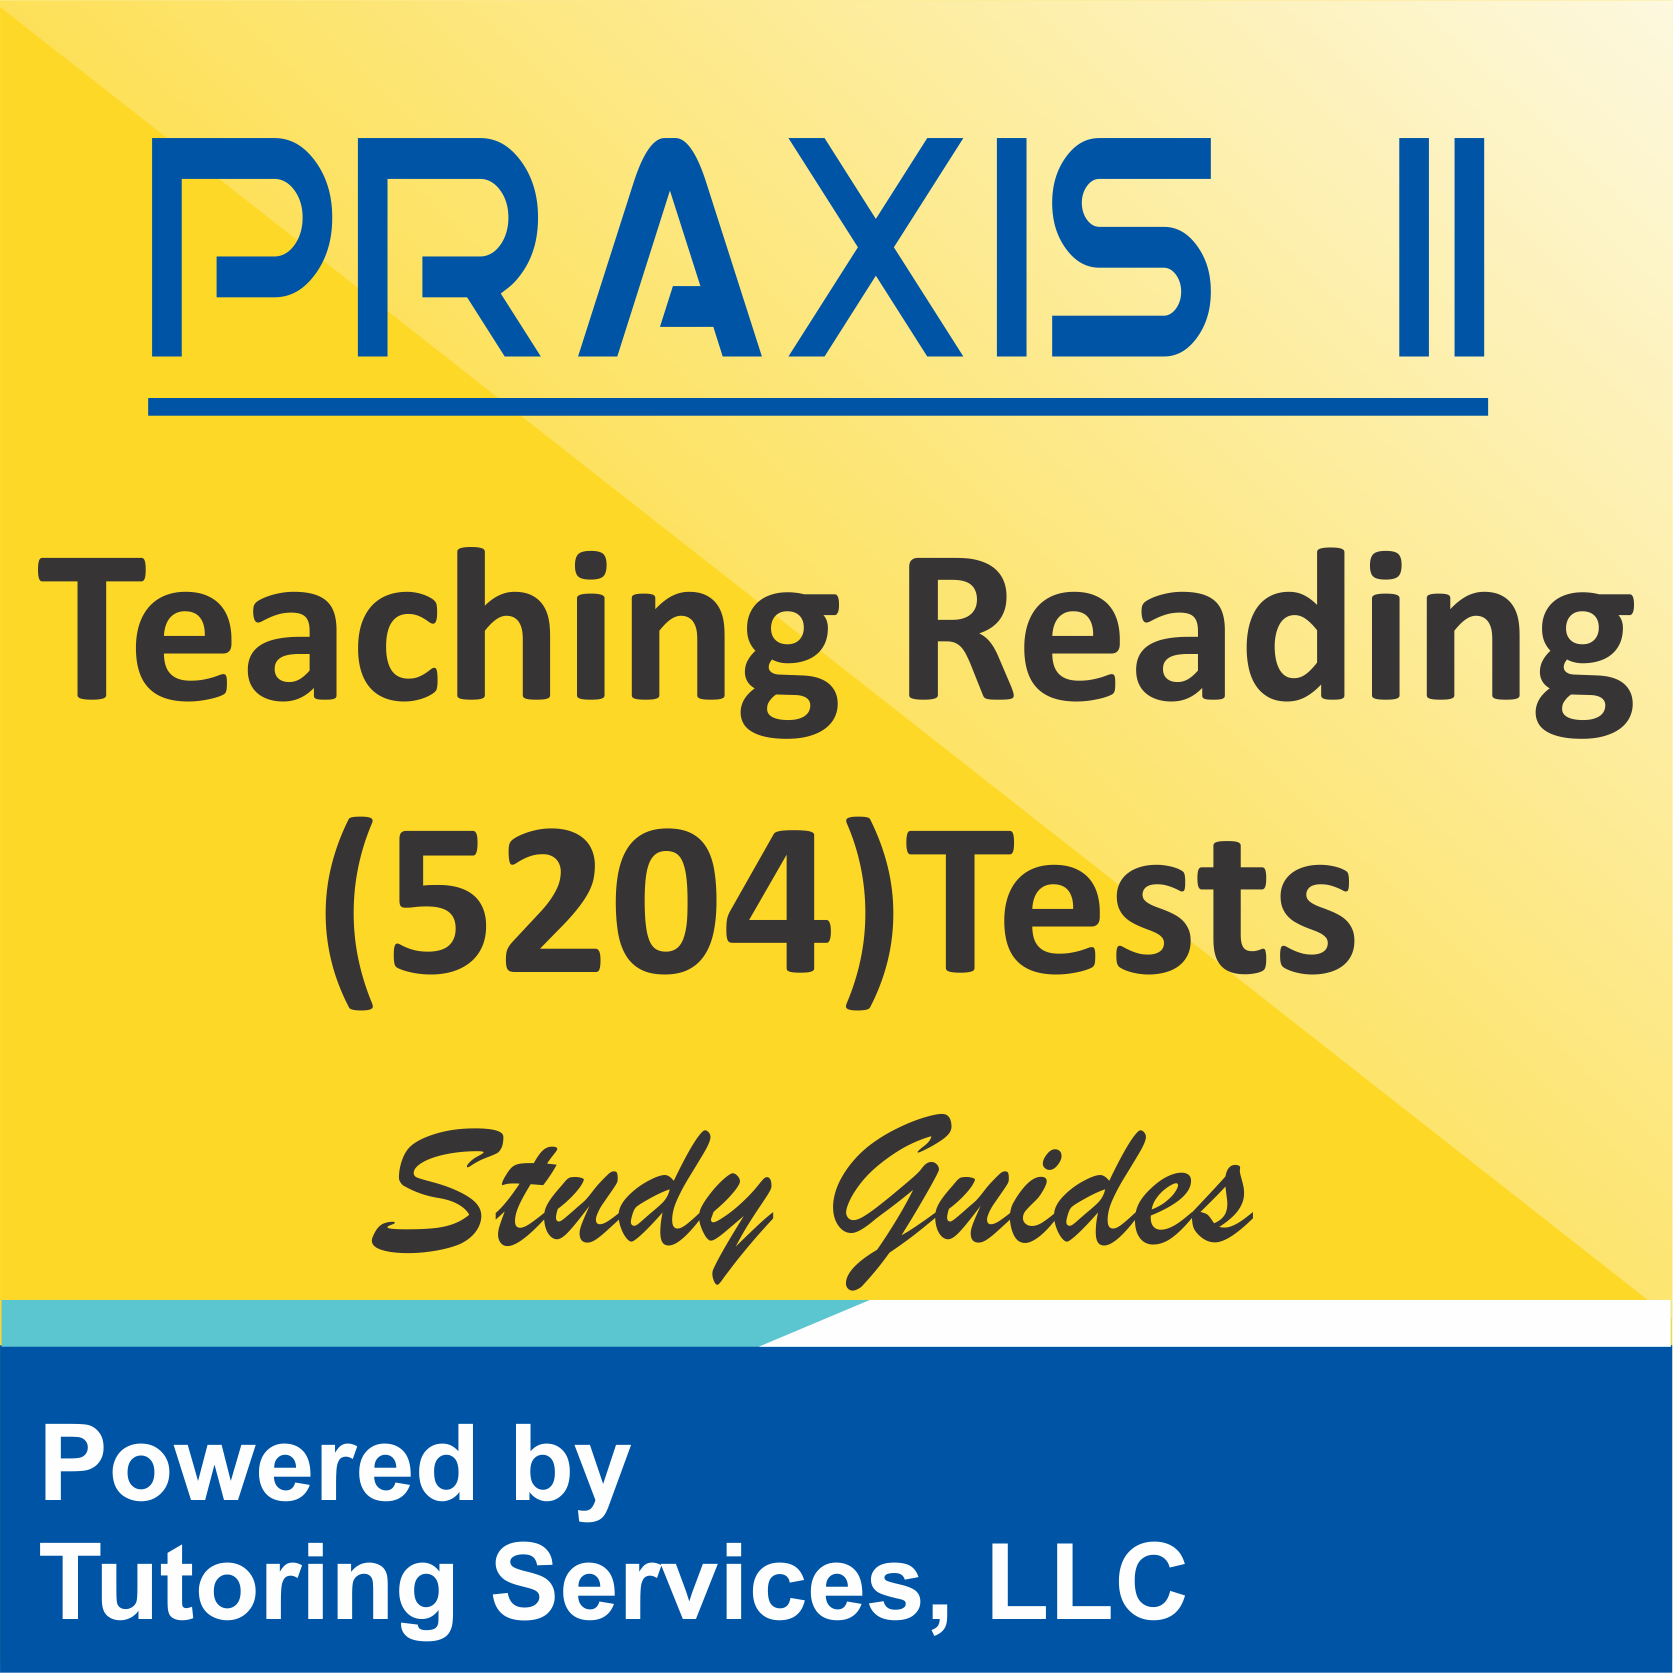 Praxis II Teaching Reading (5204) Test Format